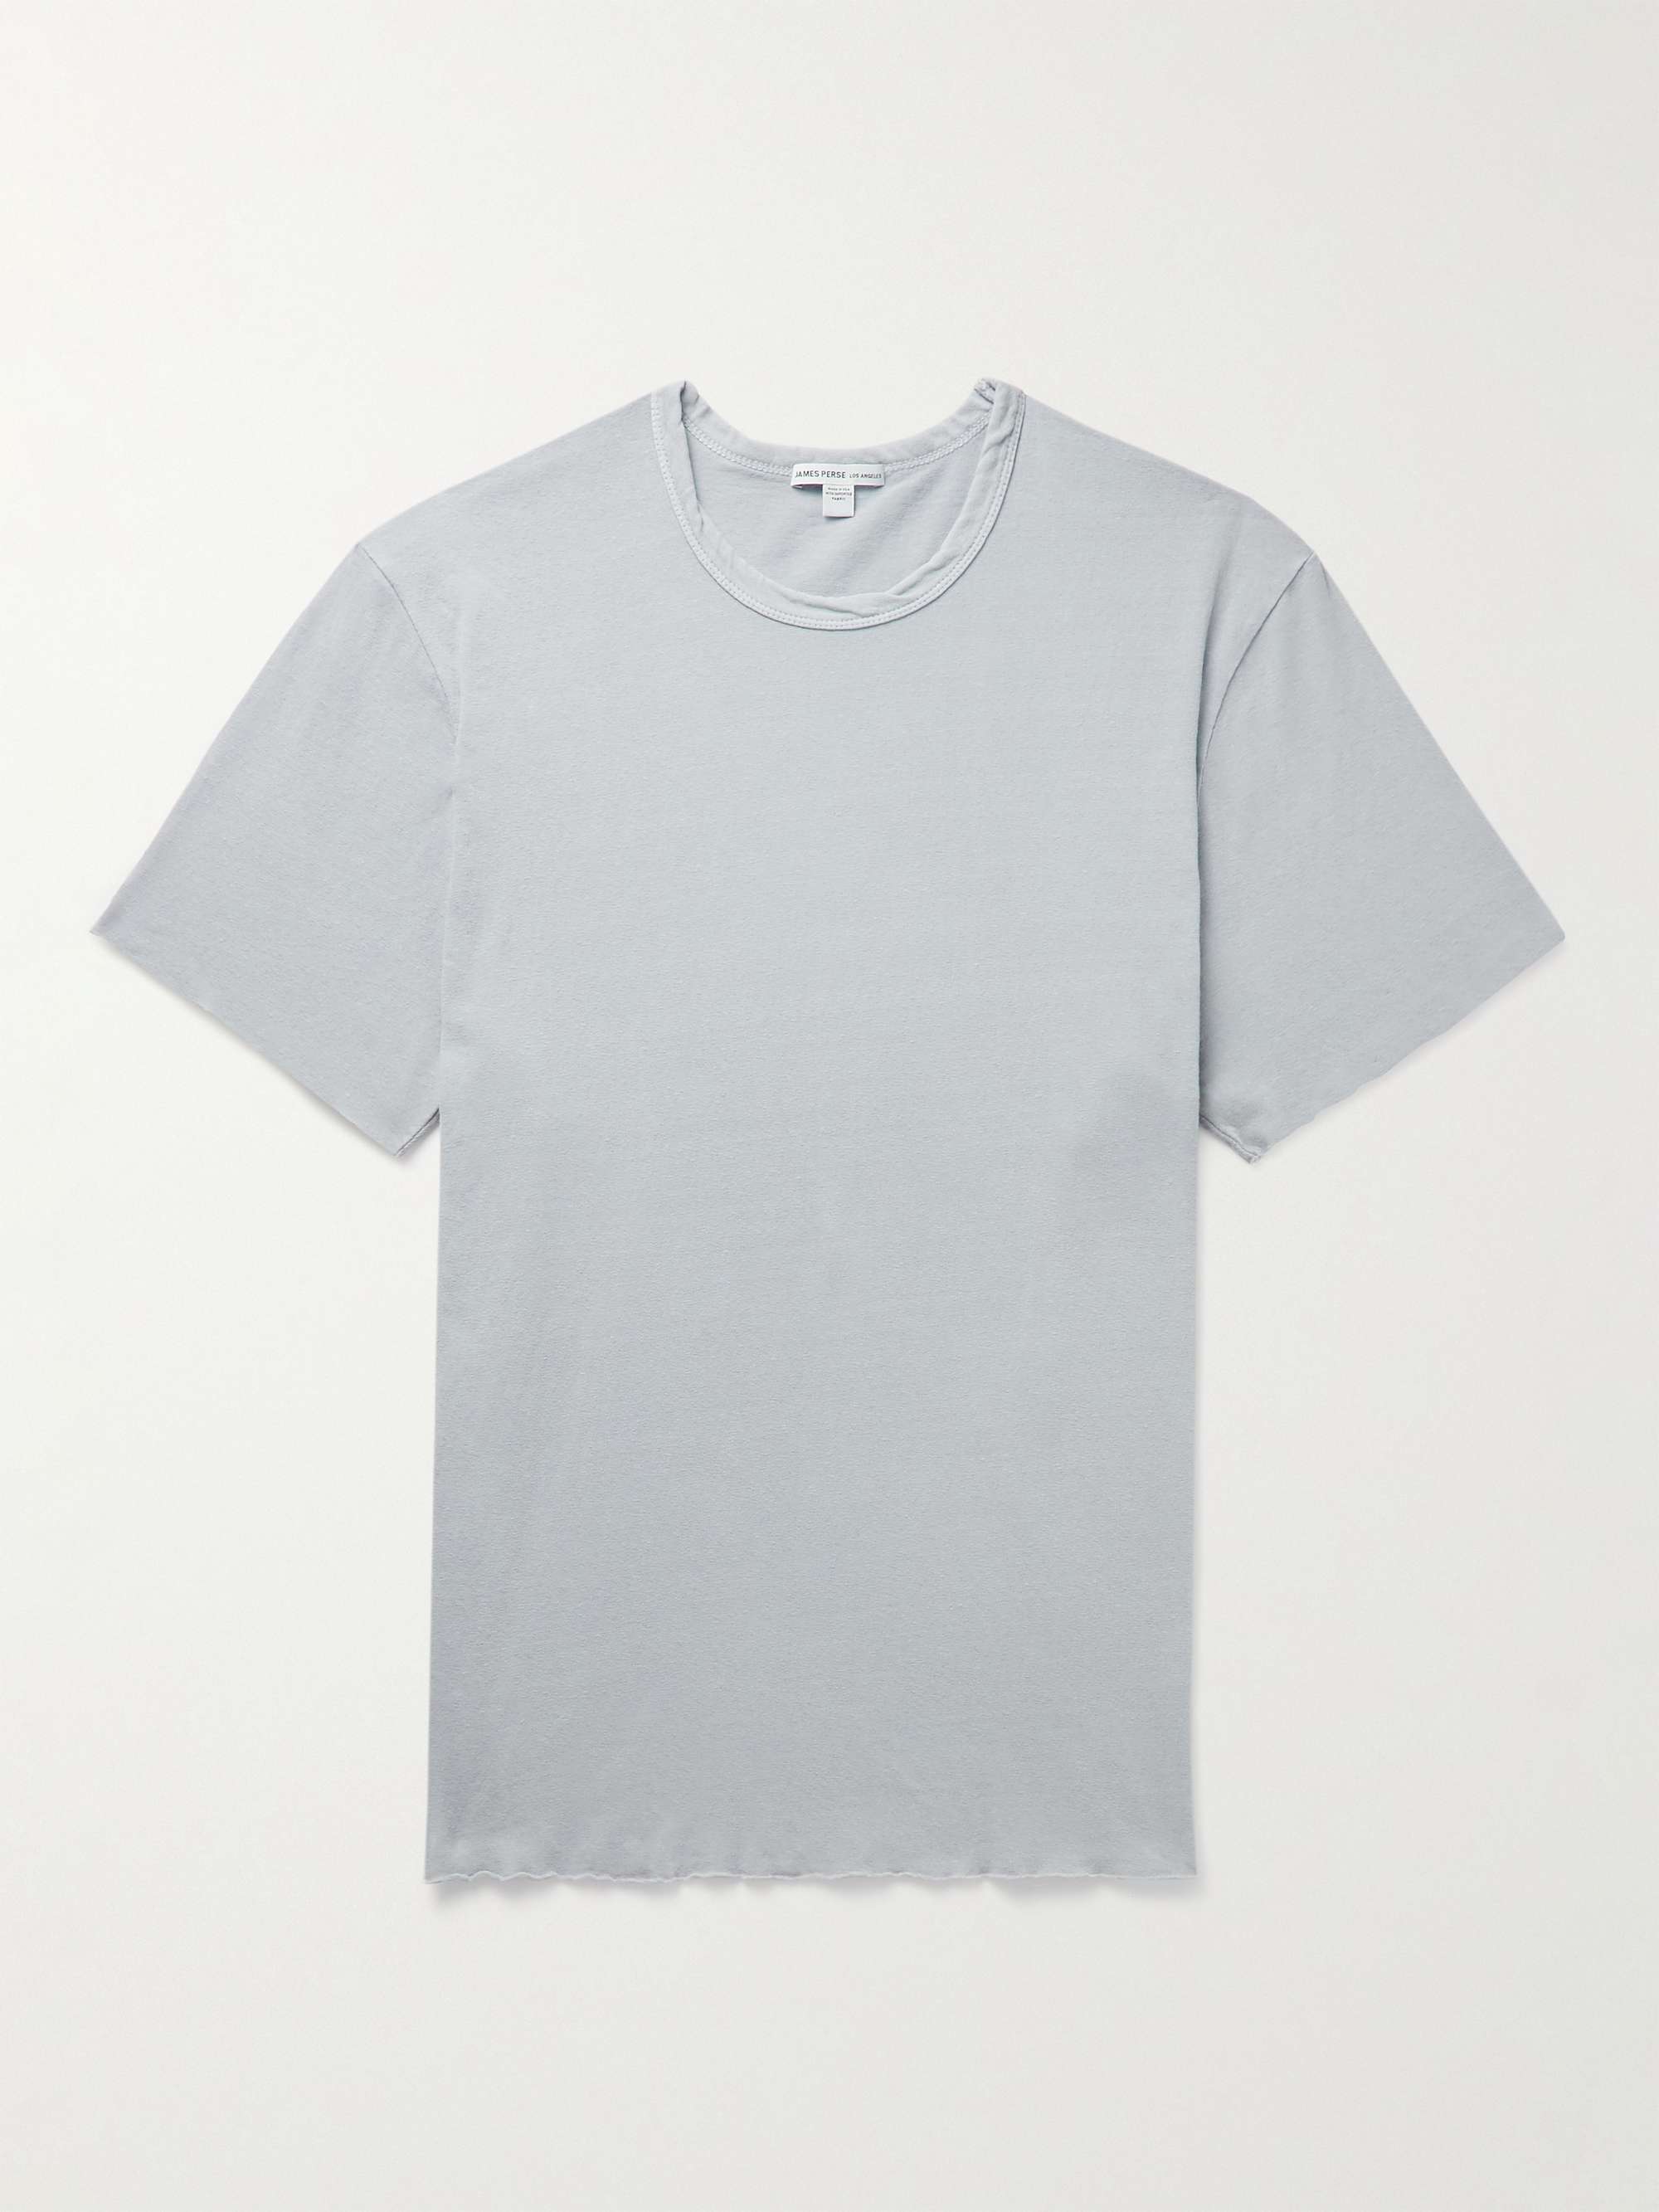 JAMES PERSE Slub Cotton and Linen-Blend Jersey T-Shirt